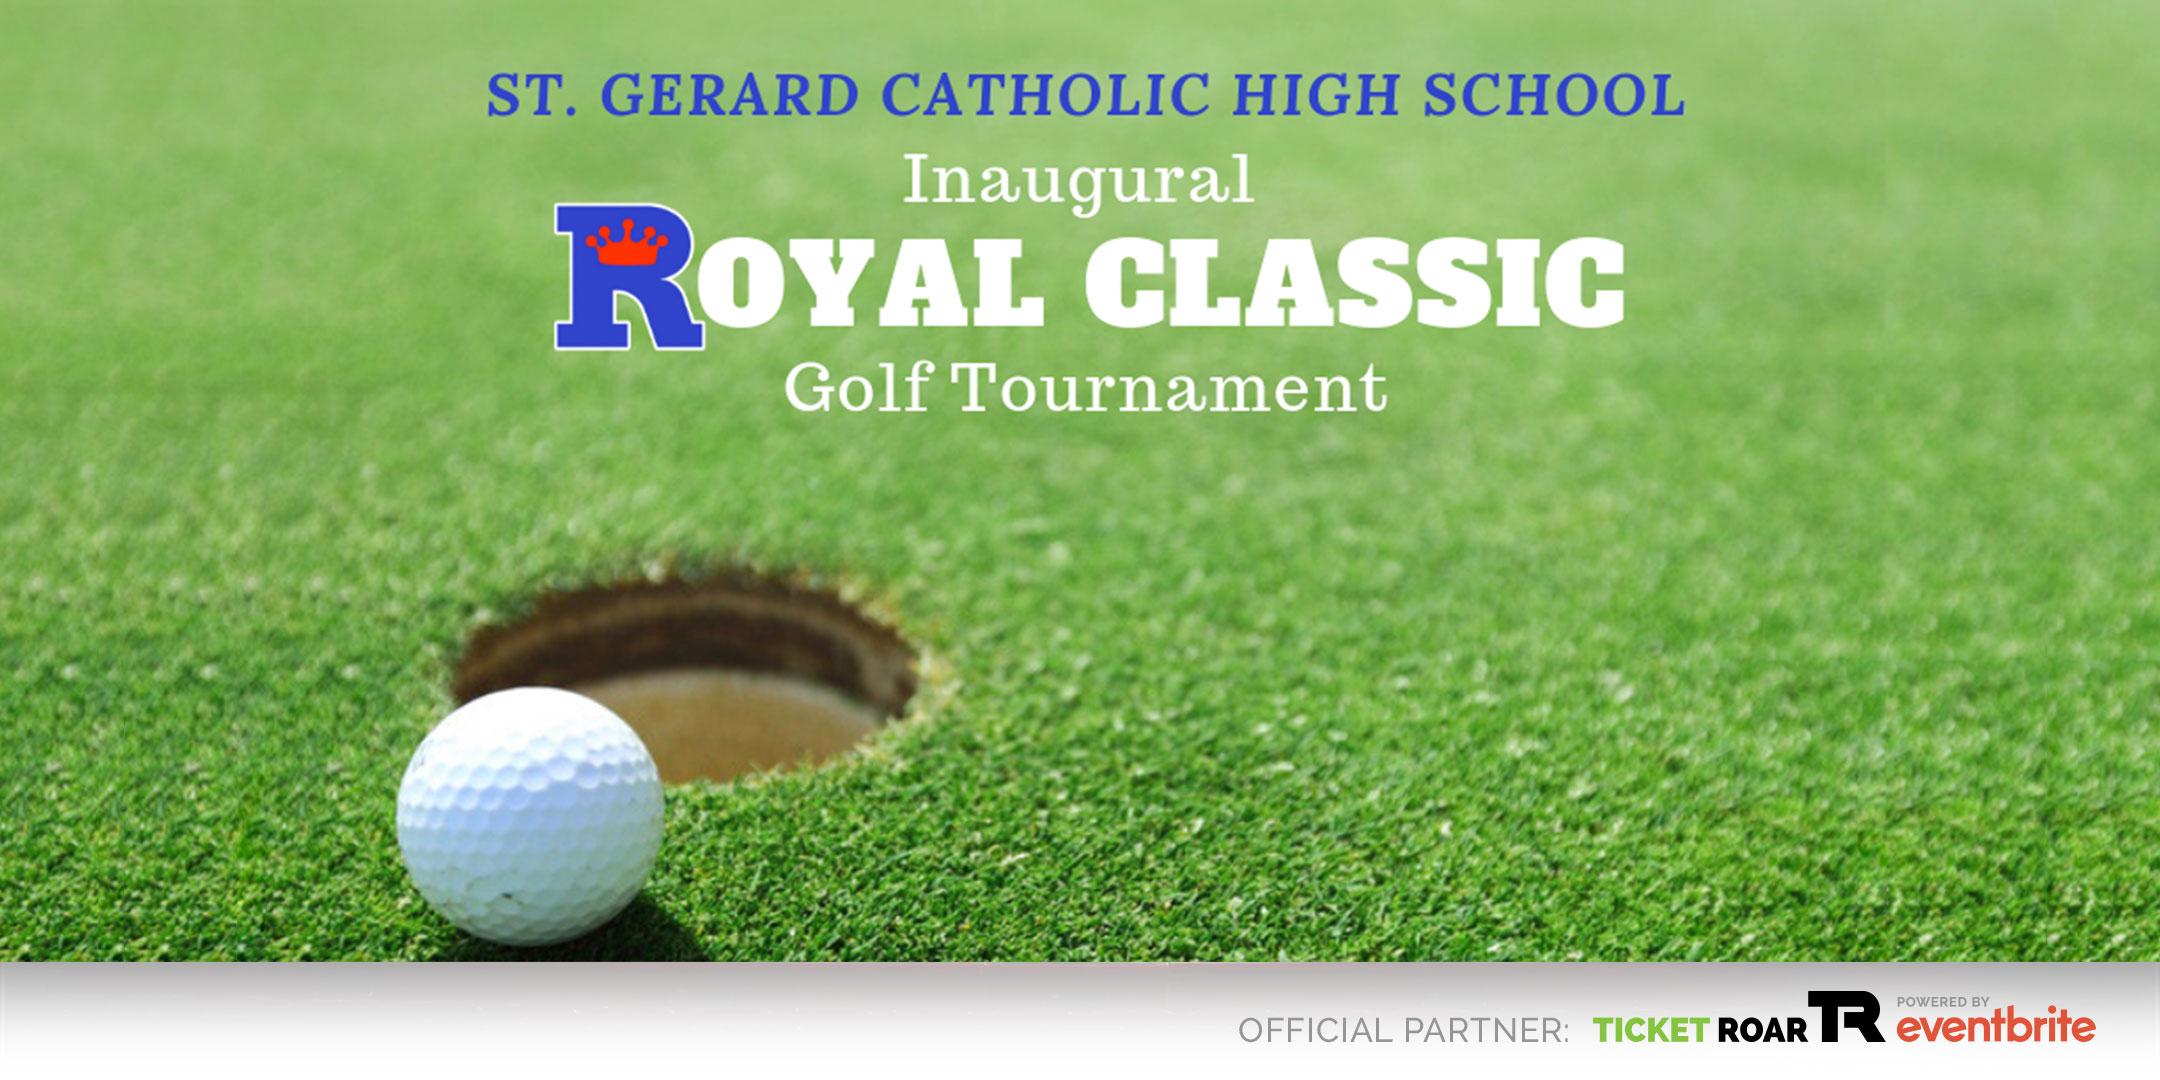 St. Gerard Catholic Inaugural Royal Classic Golf Tournament